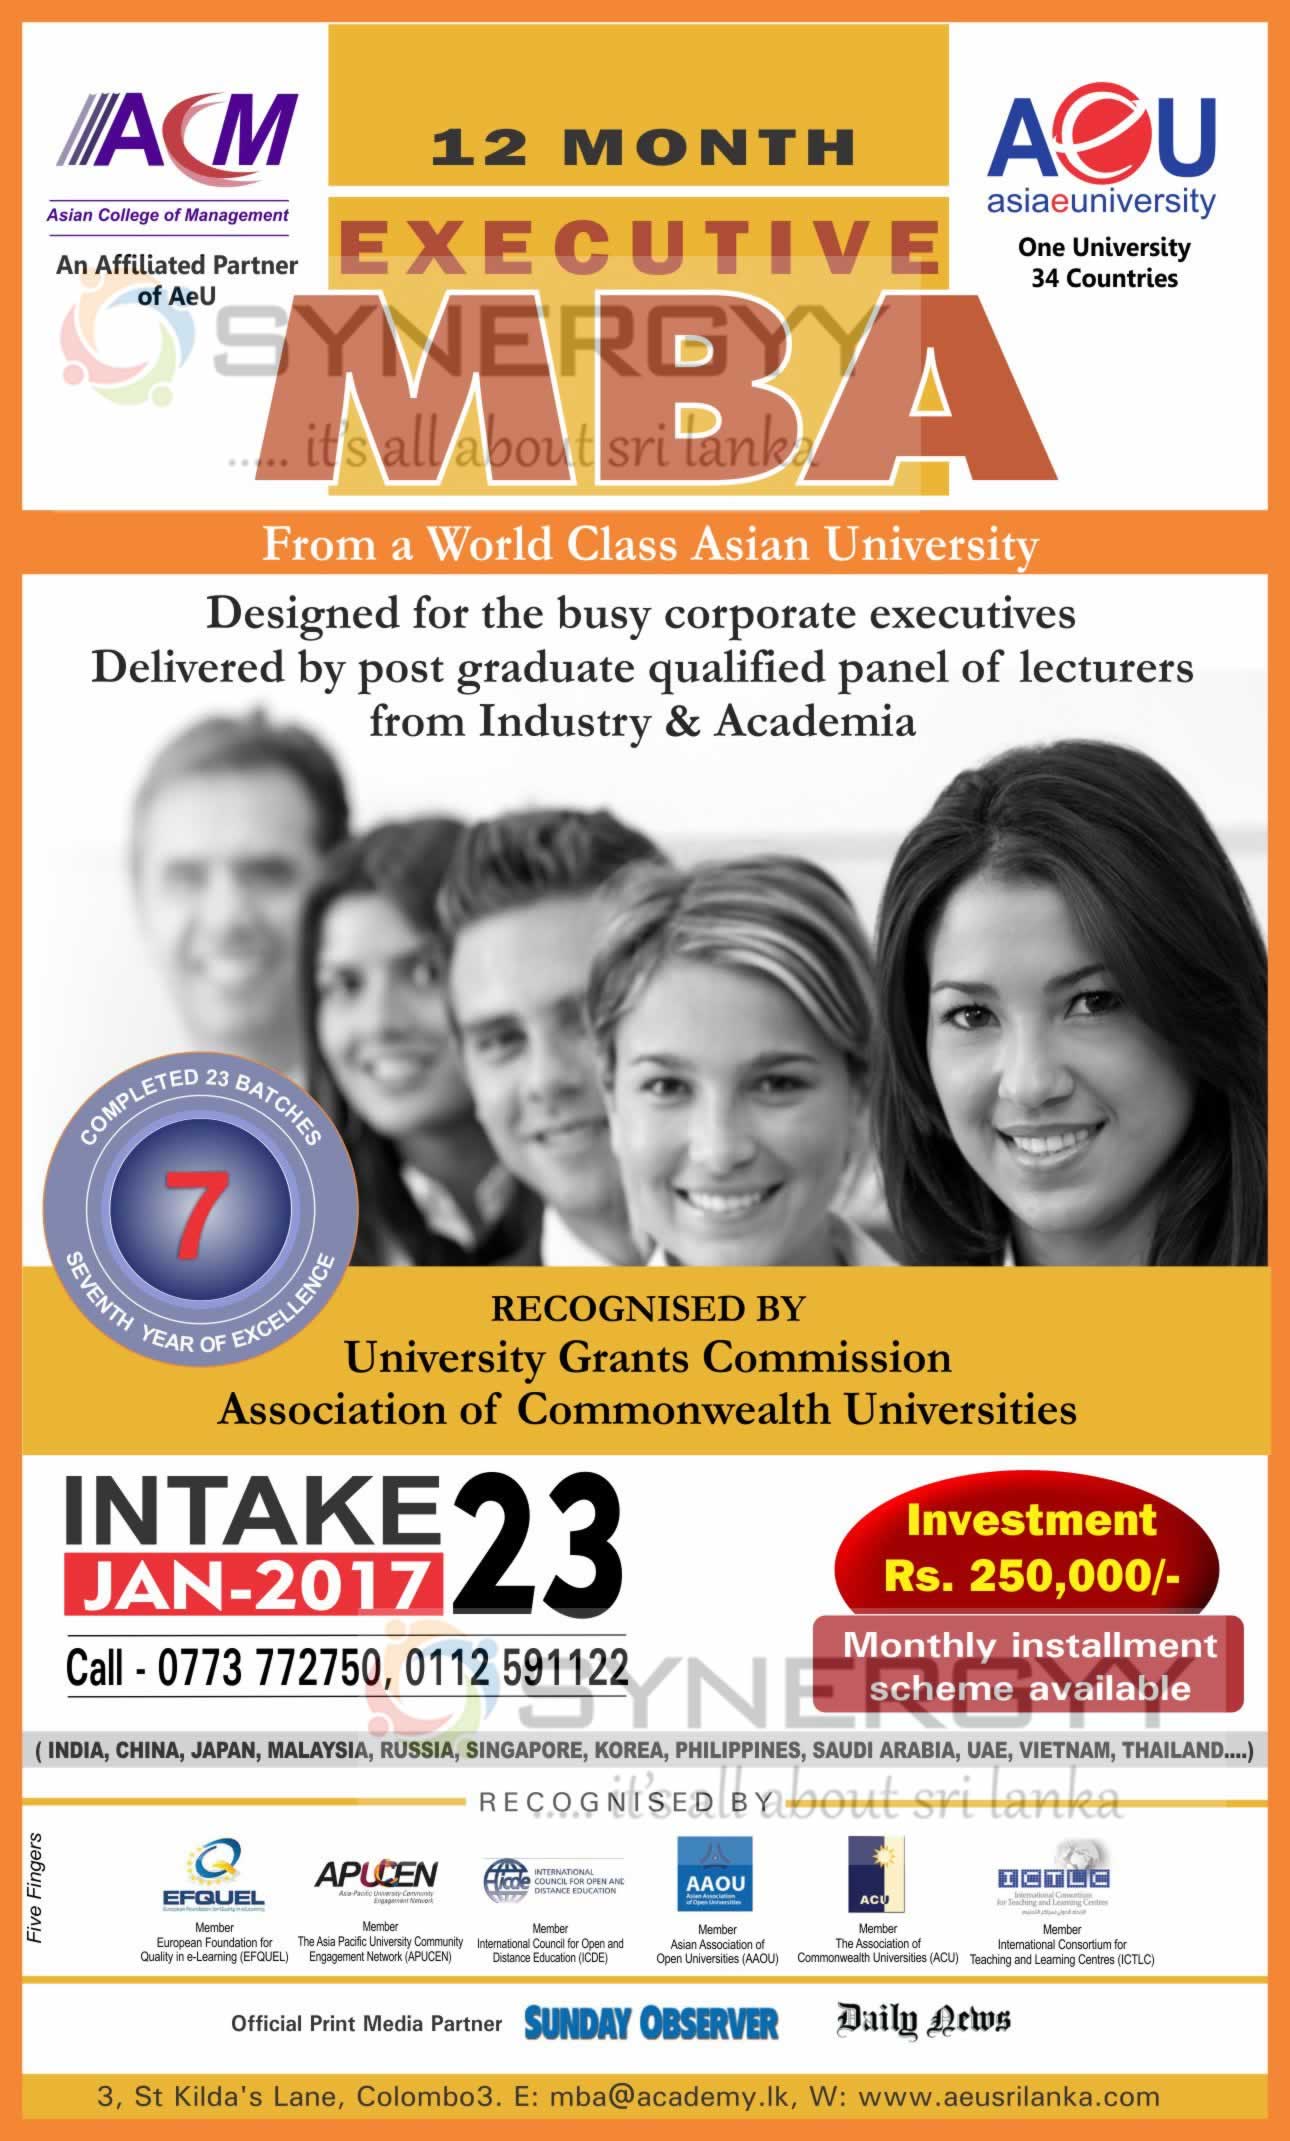 Asia e University 12 month Executive MBA